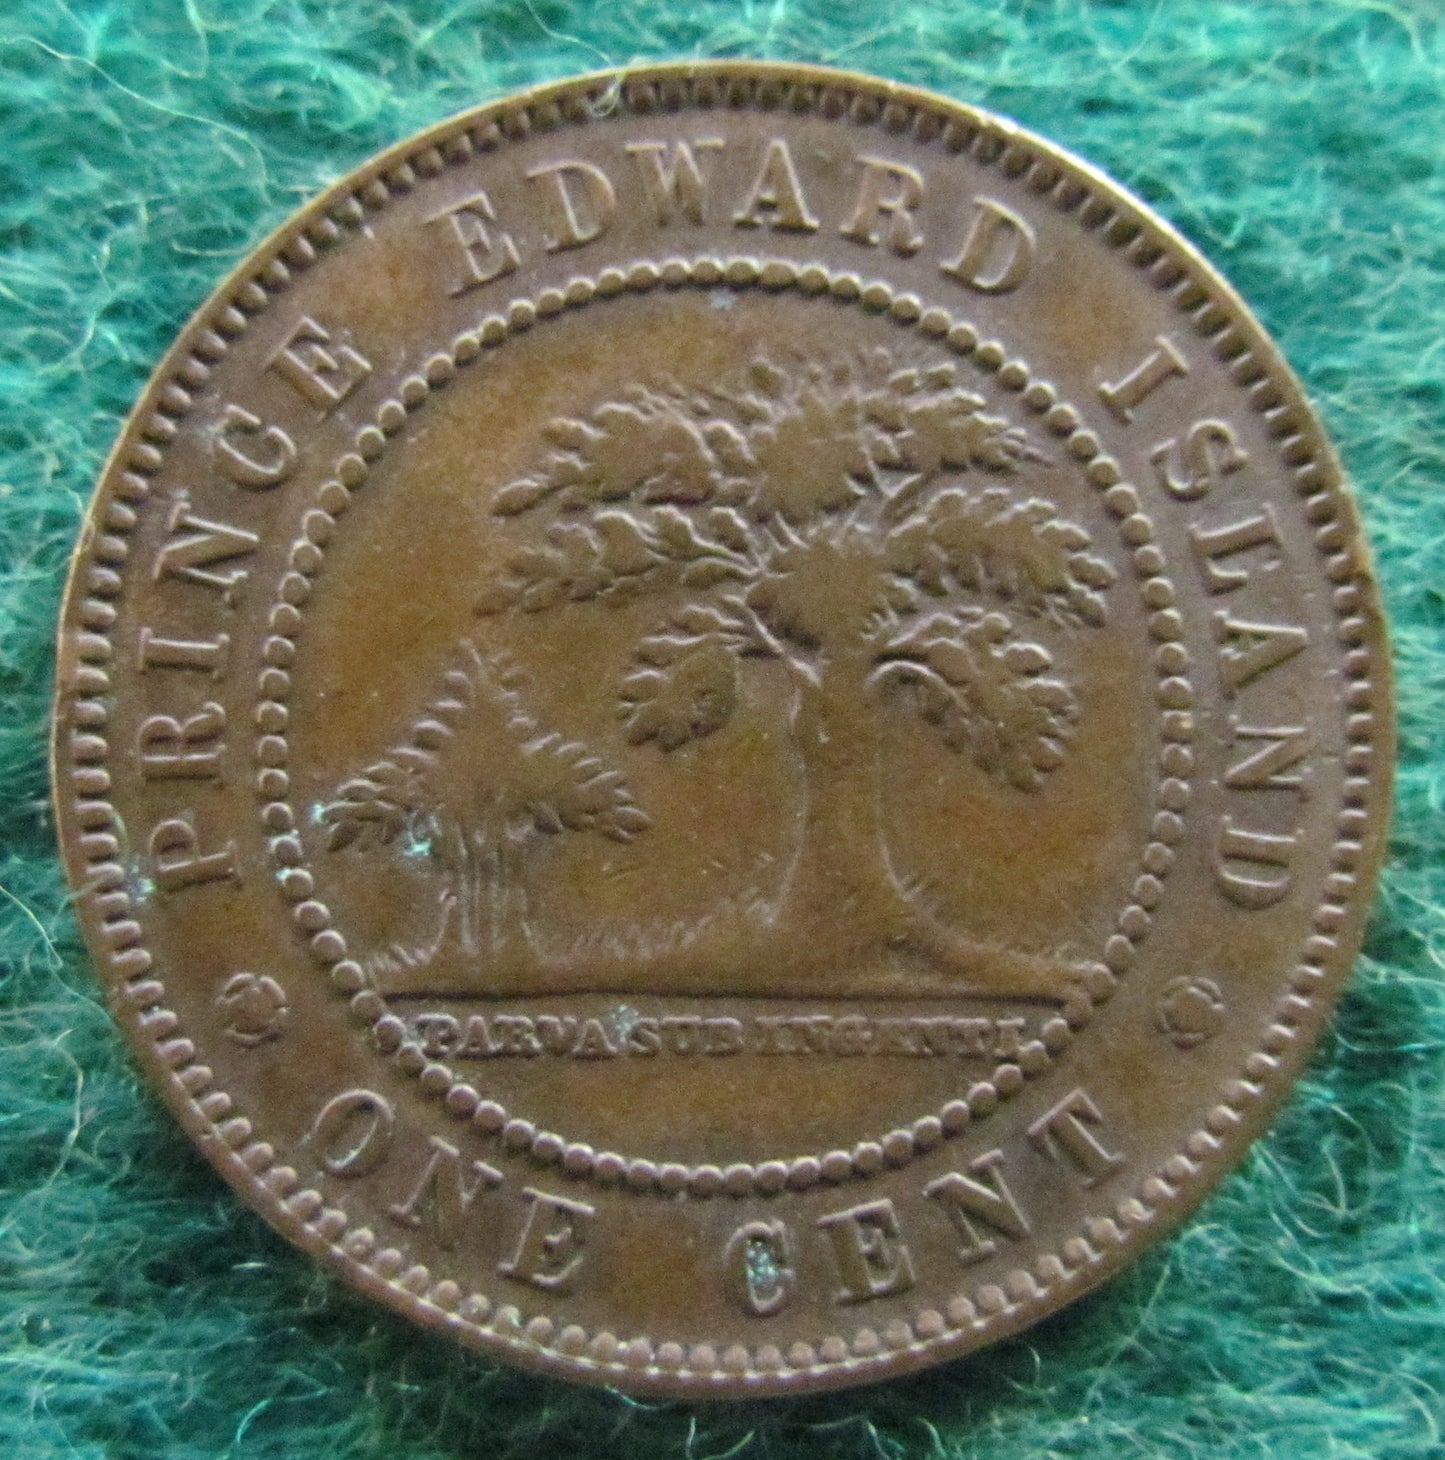 Prince Edward Island 1871 1 cent Coin Queen Victoria - Circulated